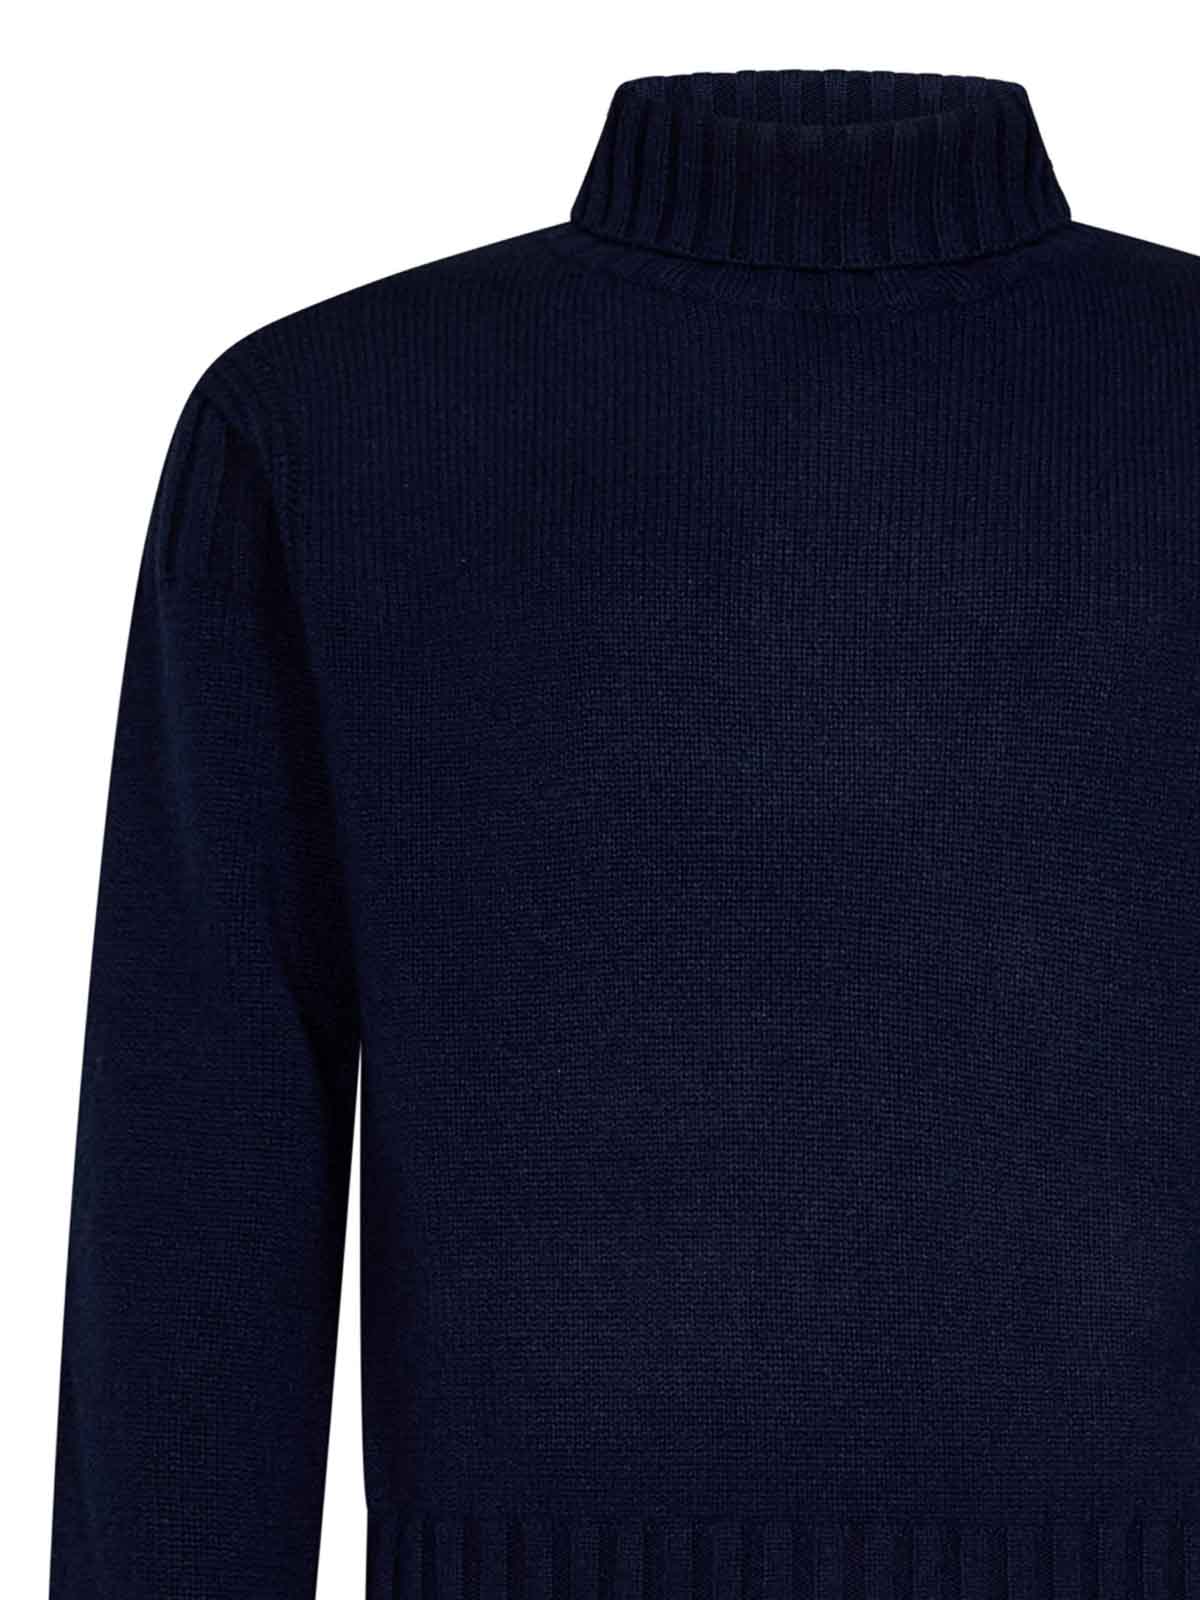 Emporio Armani Sweater in Wool Blend